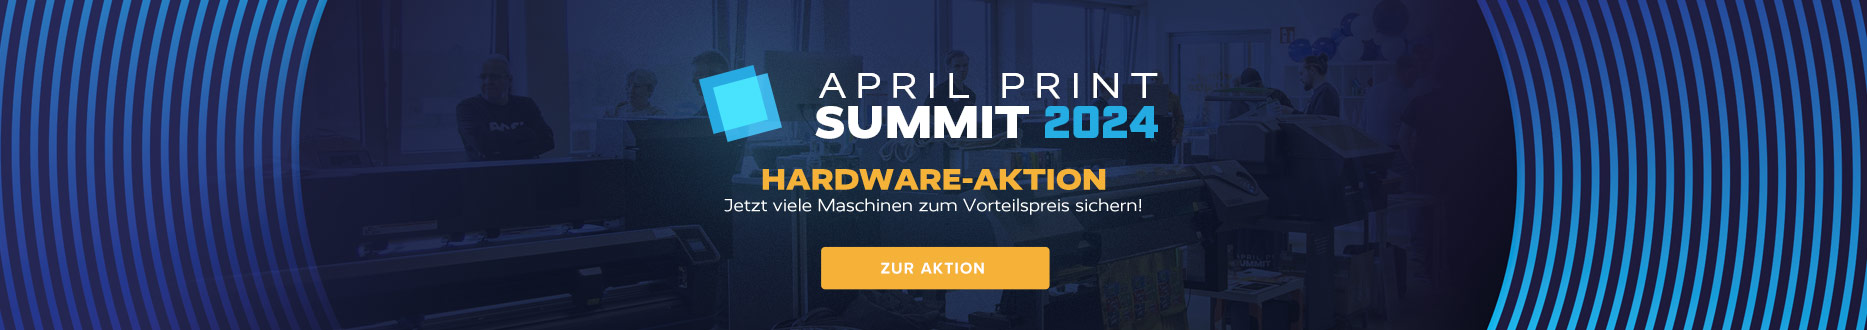 Hardware-Aktion – April Print Summit 2024